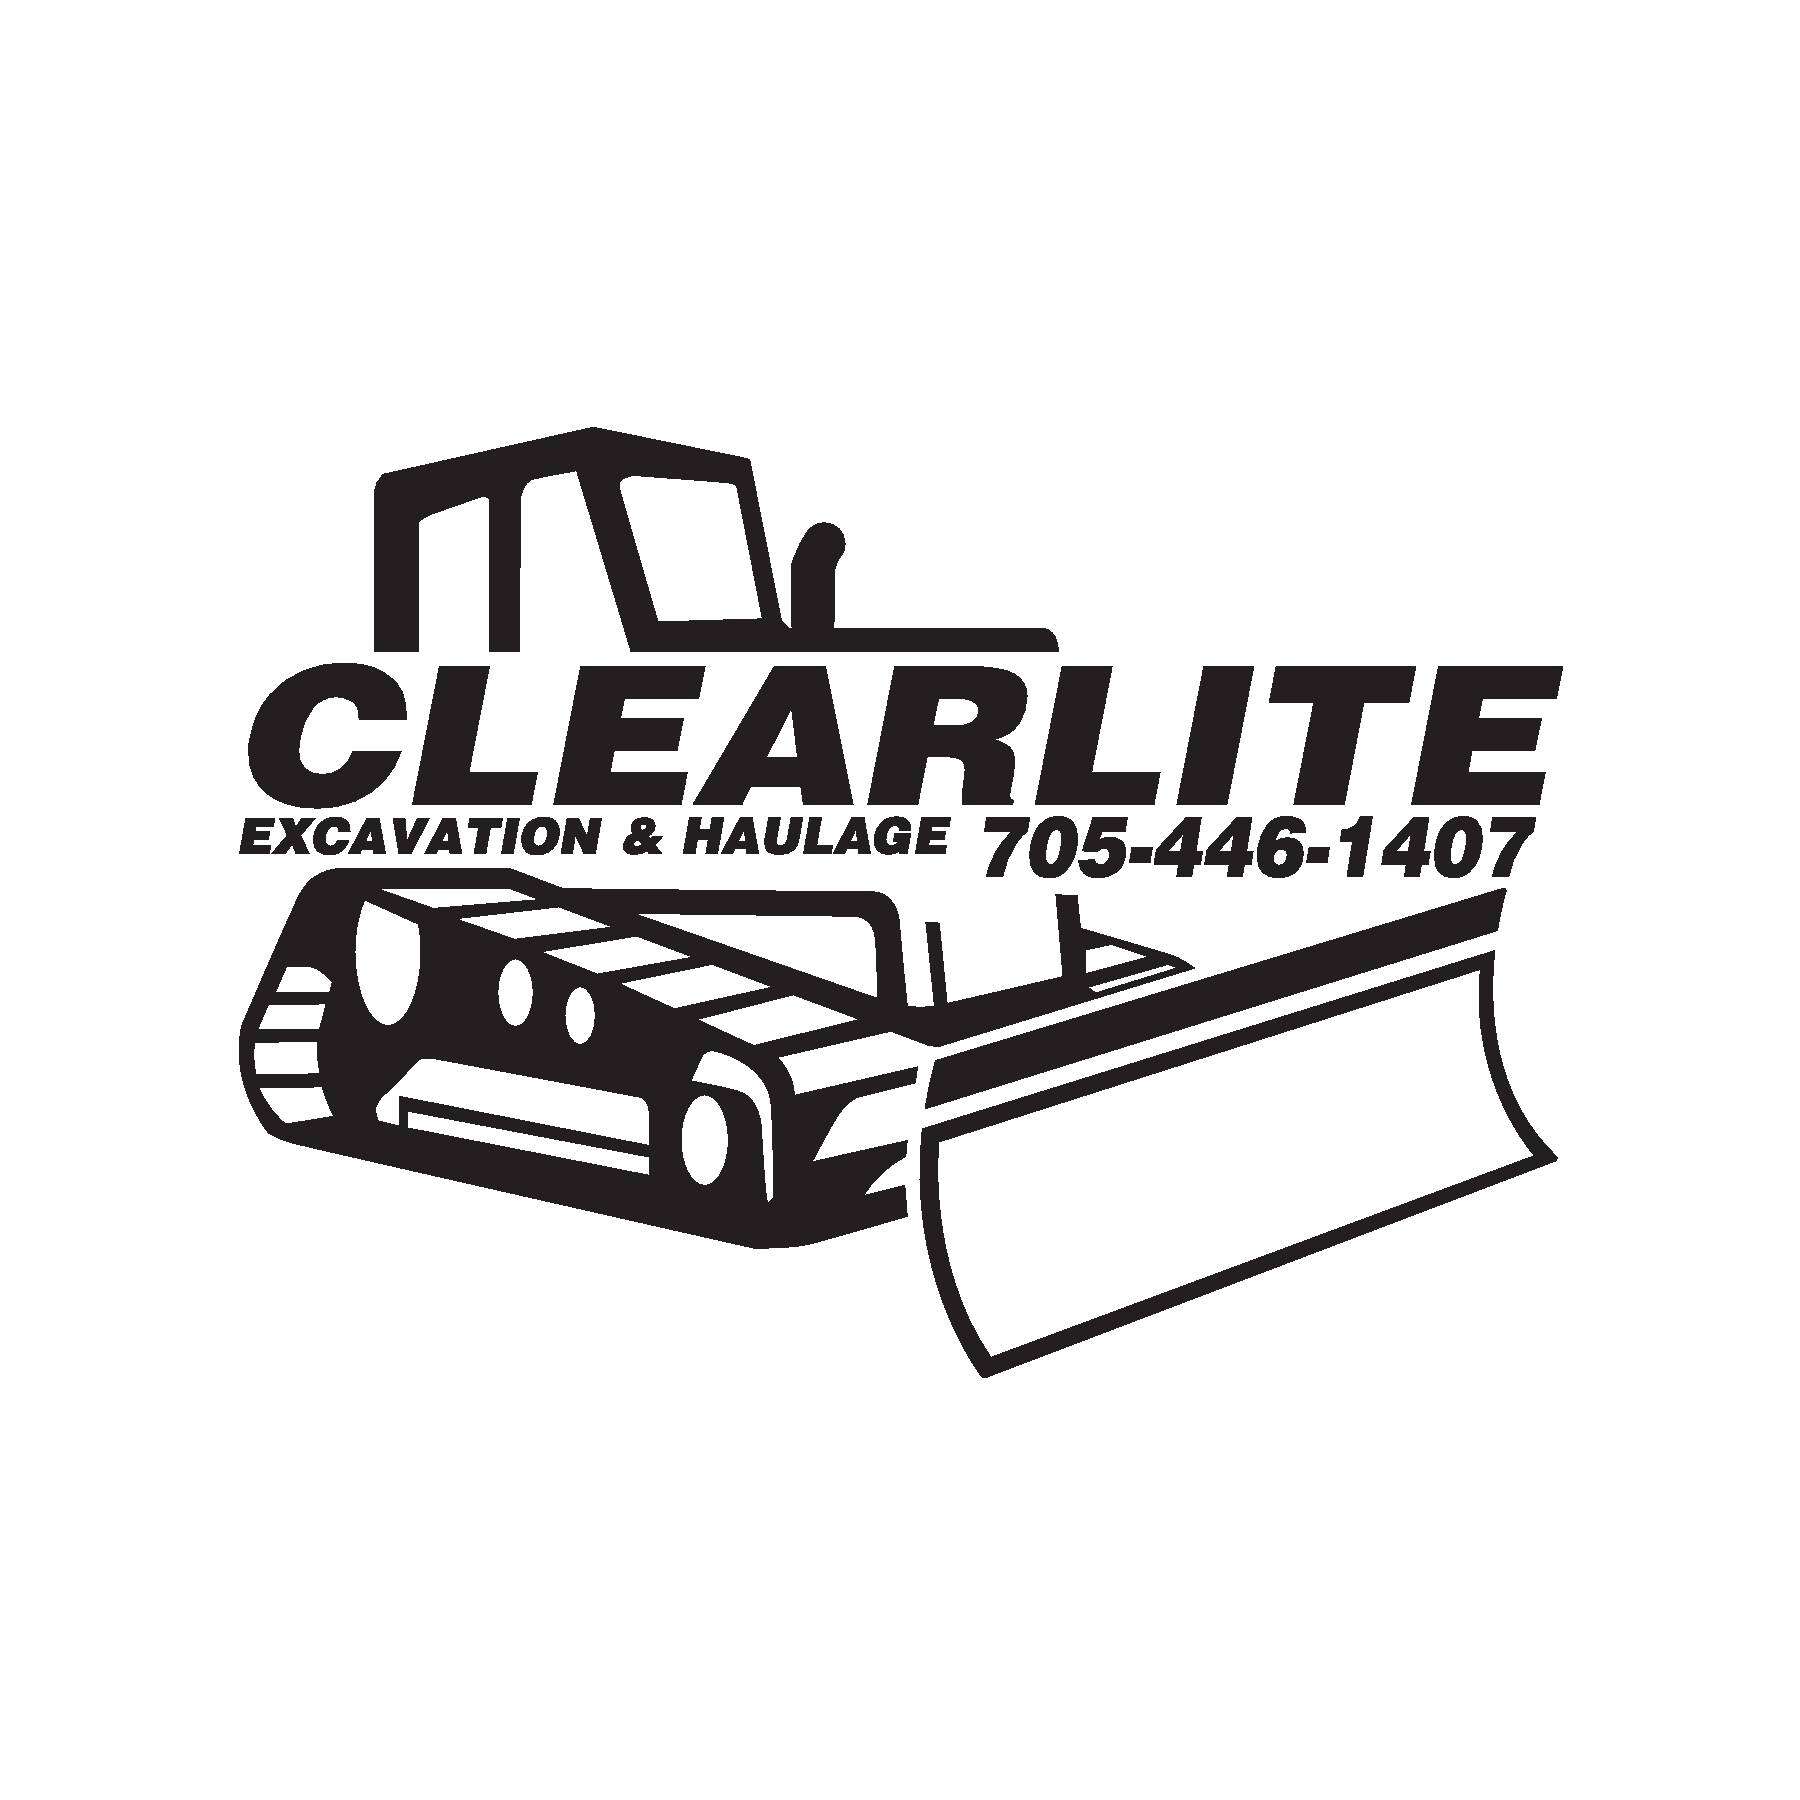 Clearlite Excavation & Haulage